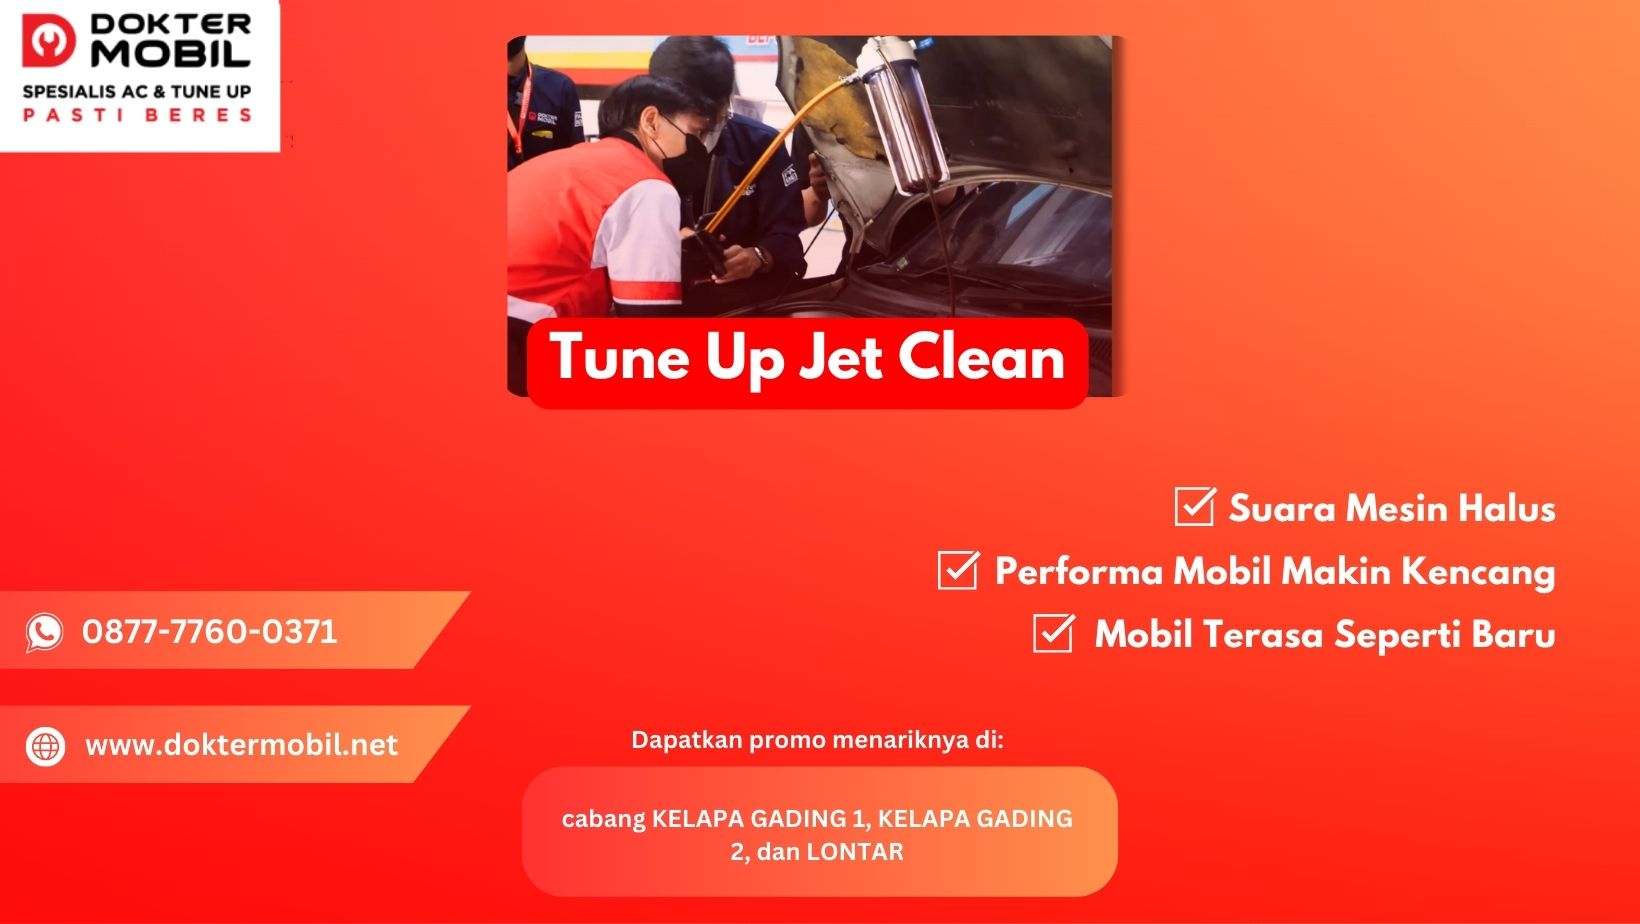 SERVICE TUNE UP MOBIL TERBAIK JAKARTA DI DOKTER MOBIL